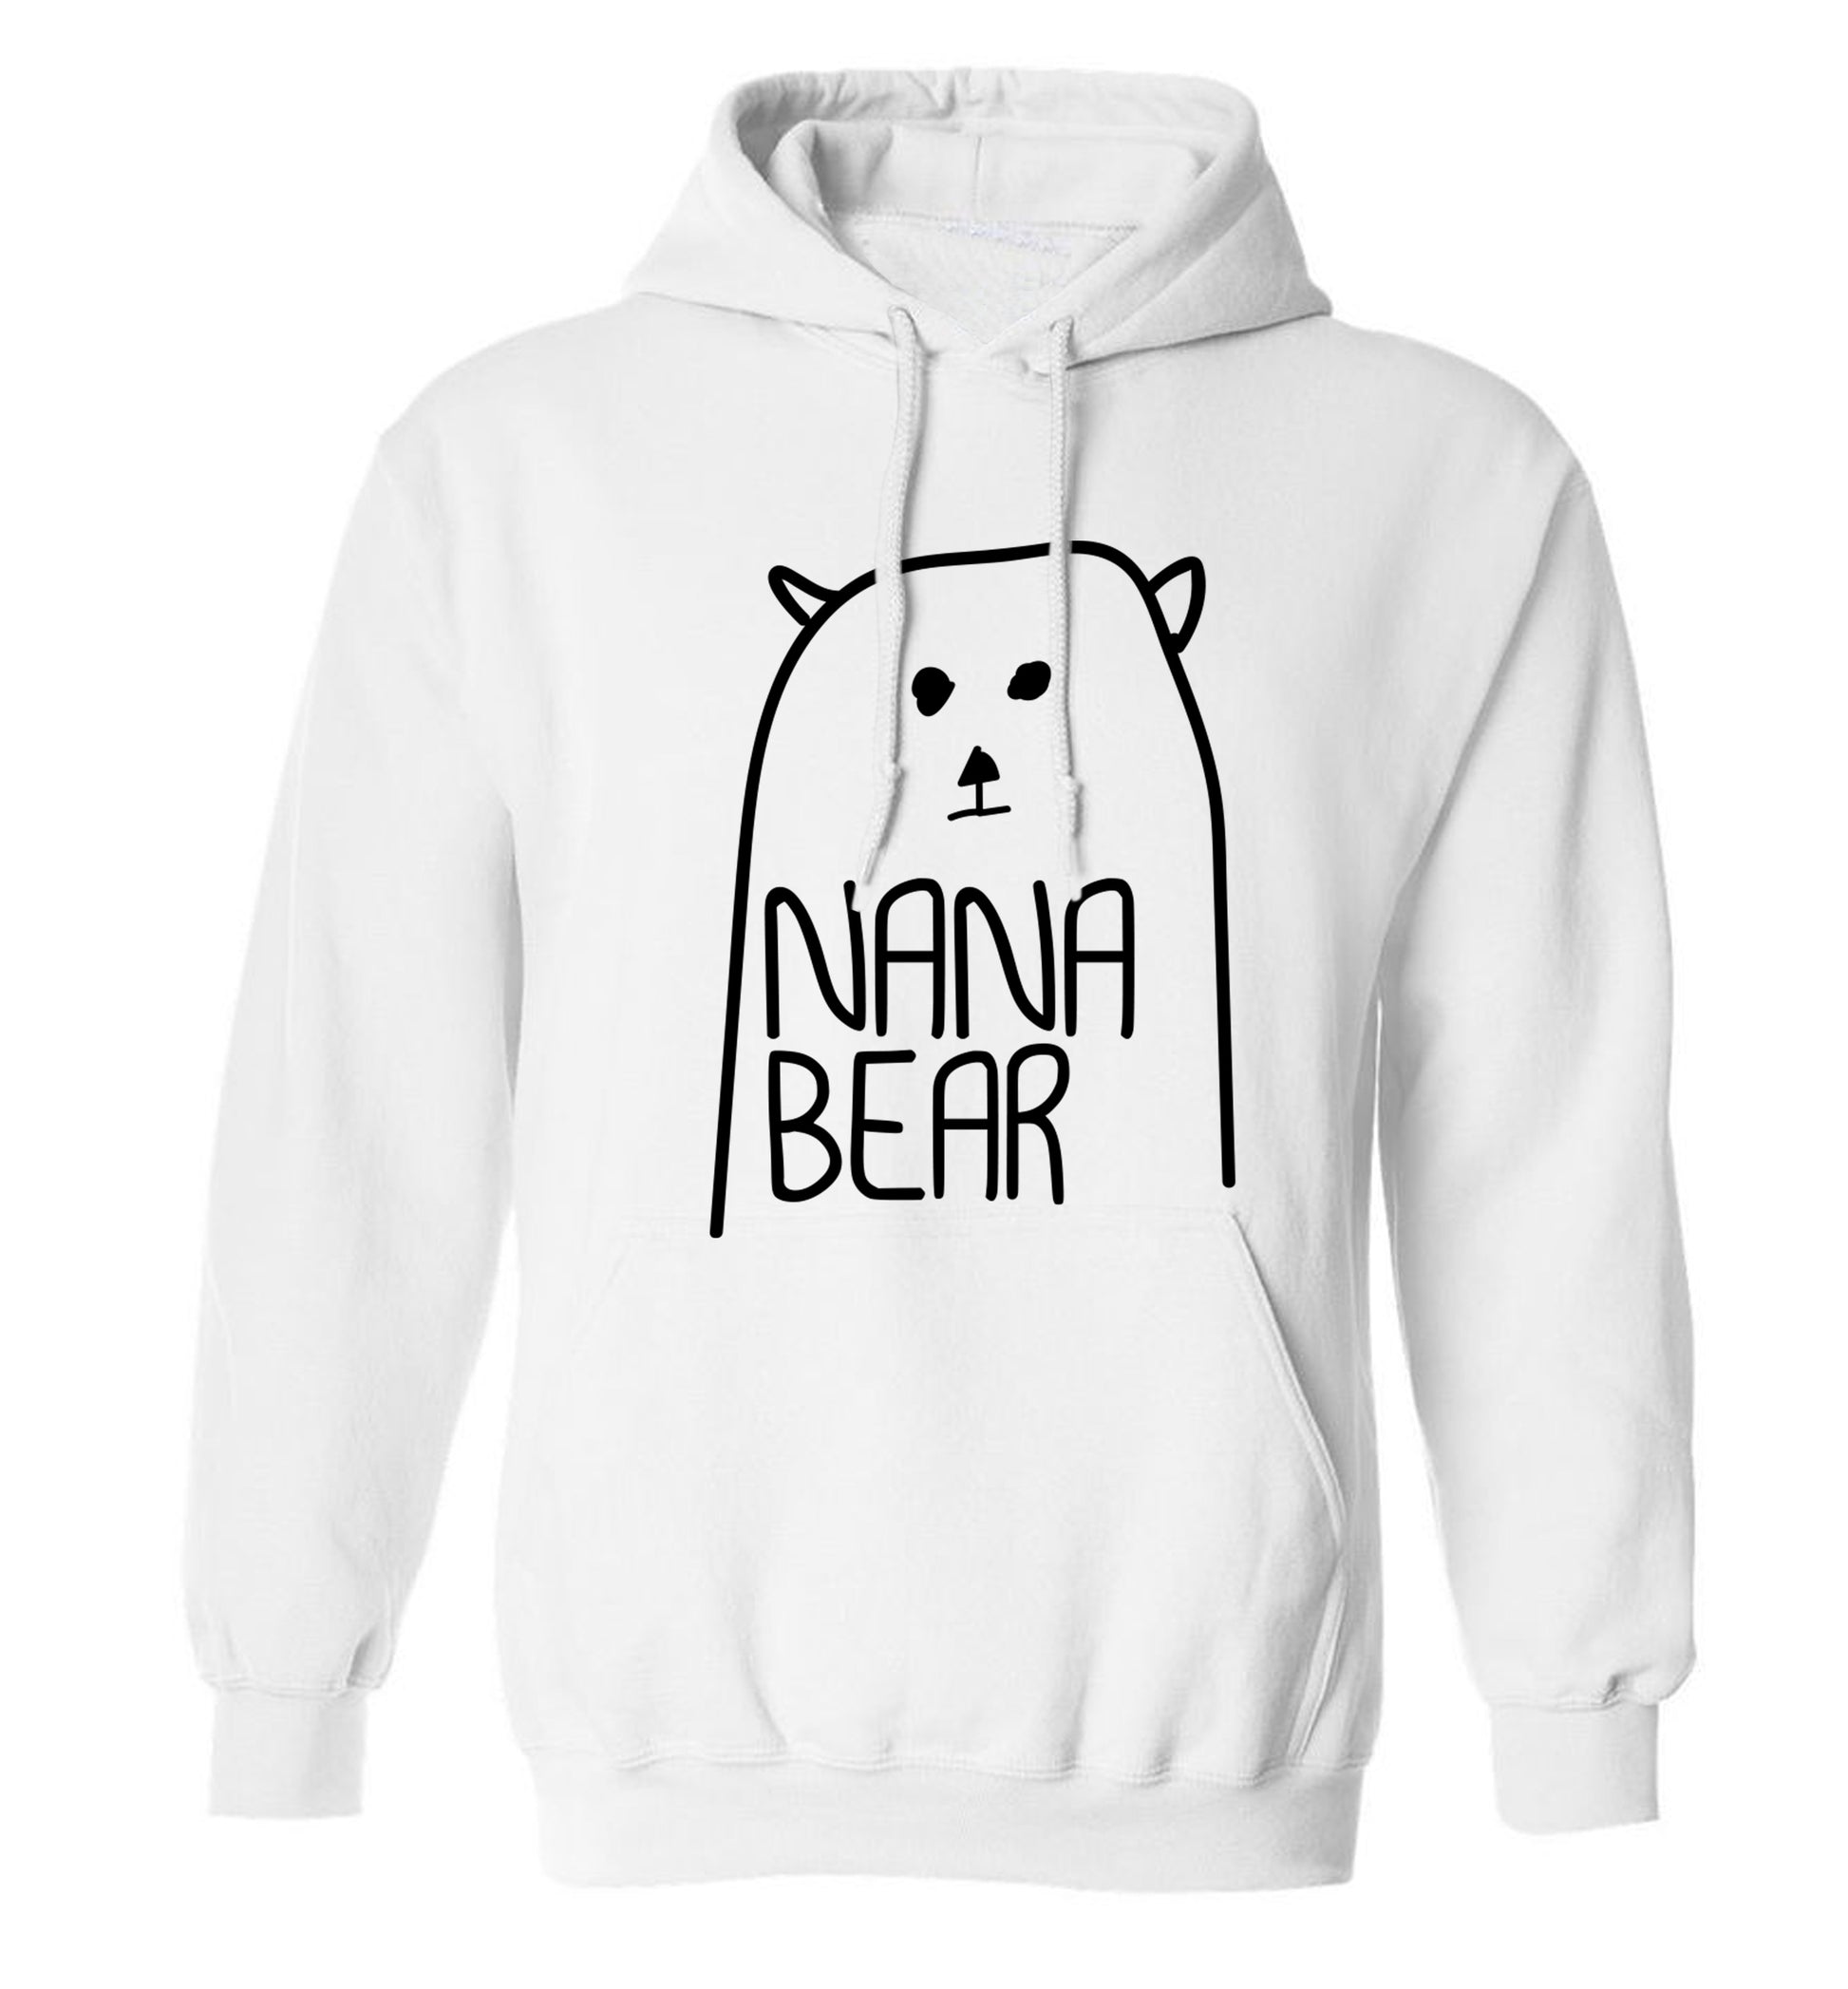 Nana bear adults unisex white hoodie 2XL